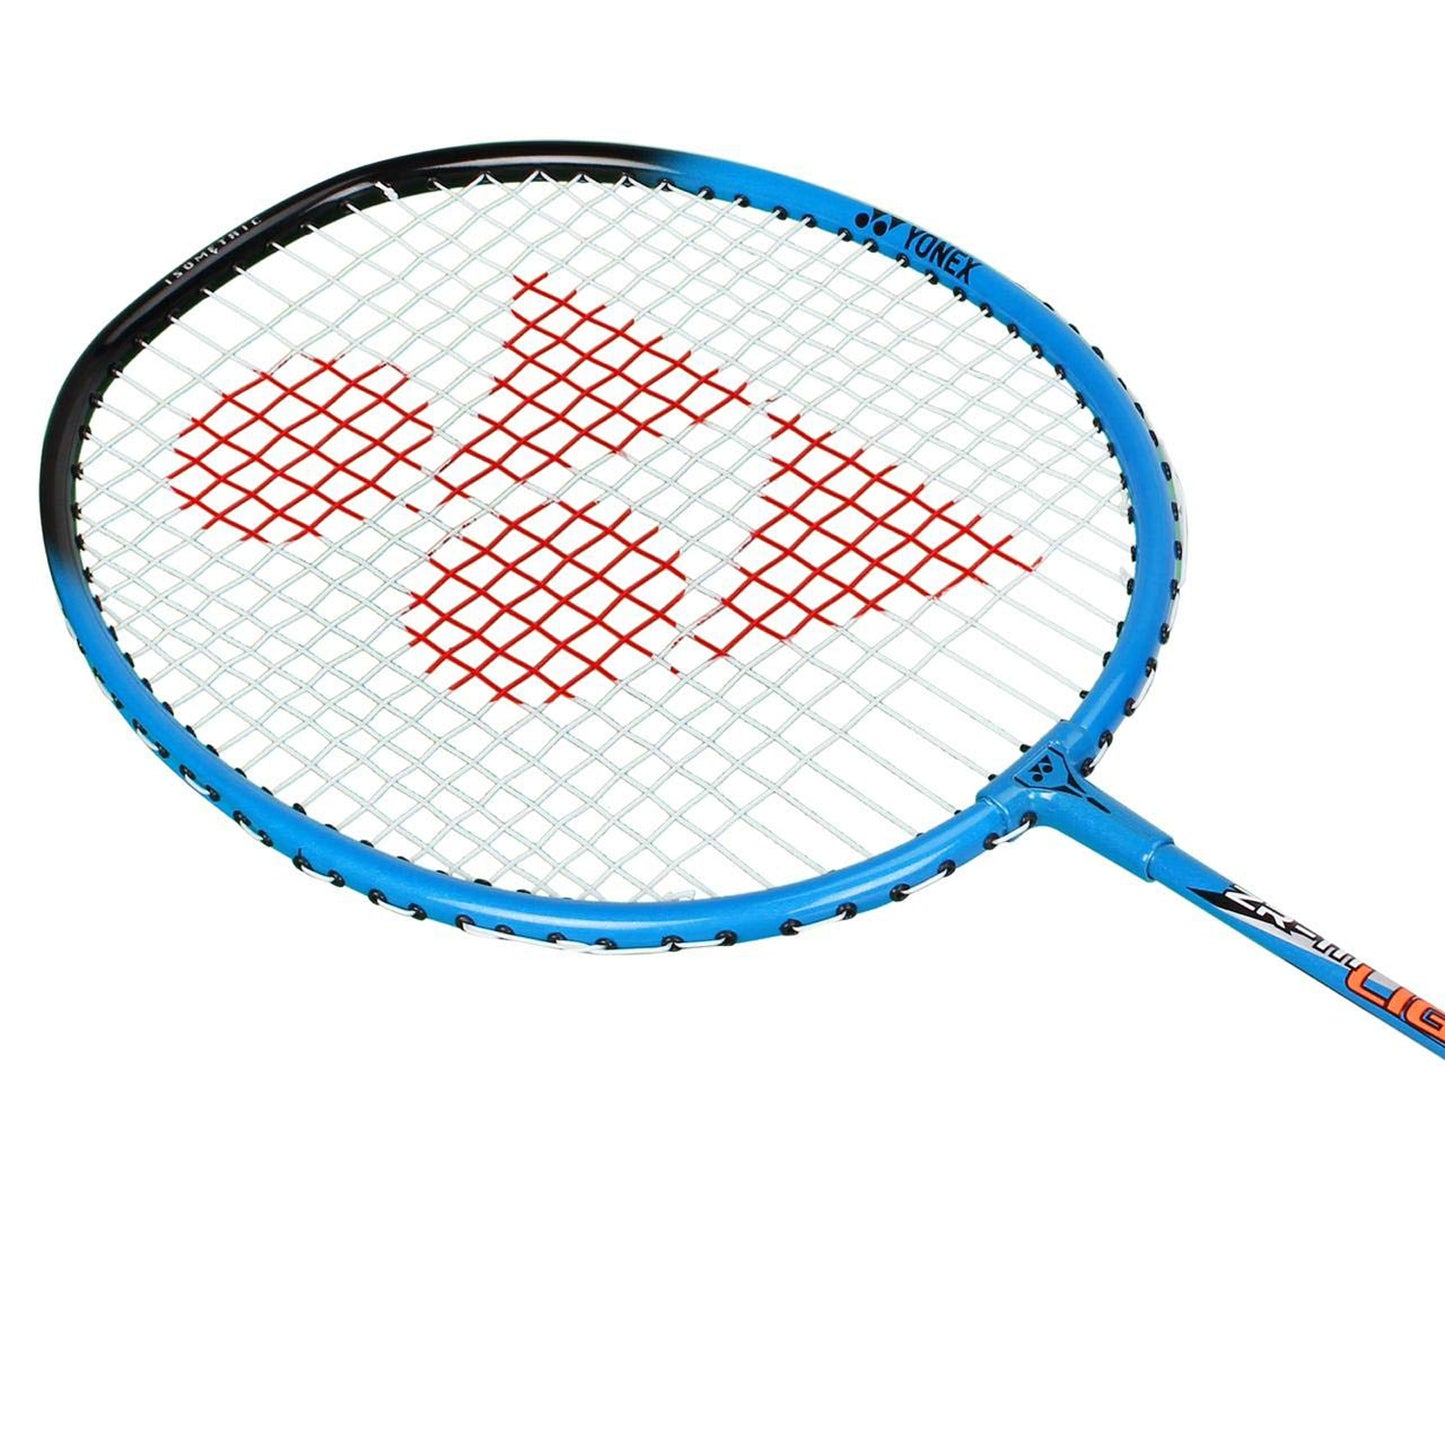 Yonex ZR 111 Light Aluminium Badminton Racquet with Full Cover, Blue - Best Price online Prokicksports.com